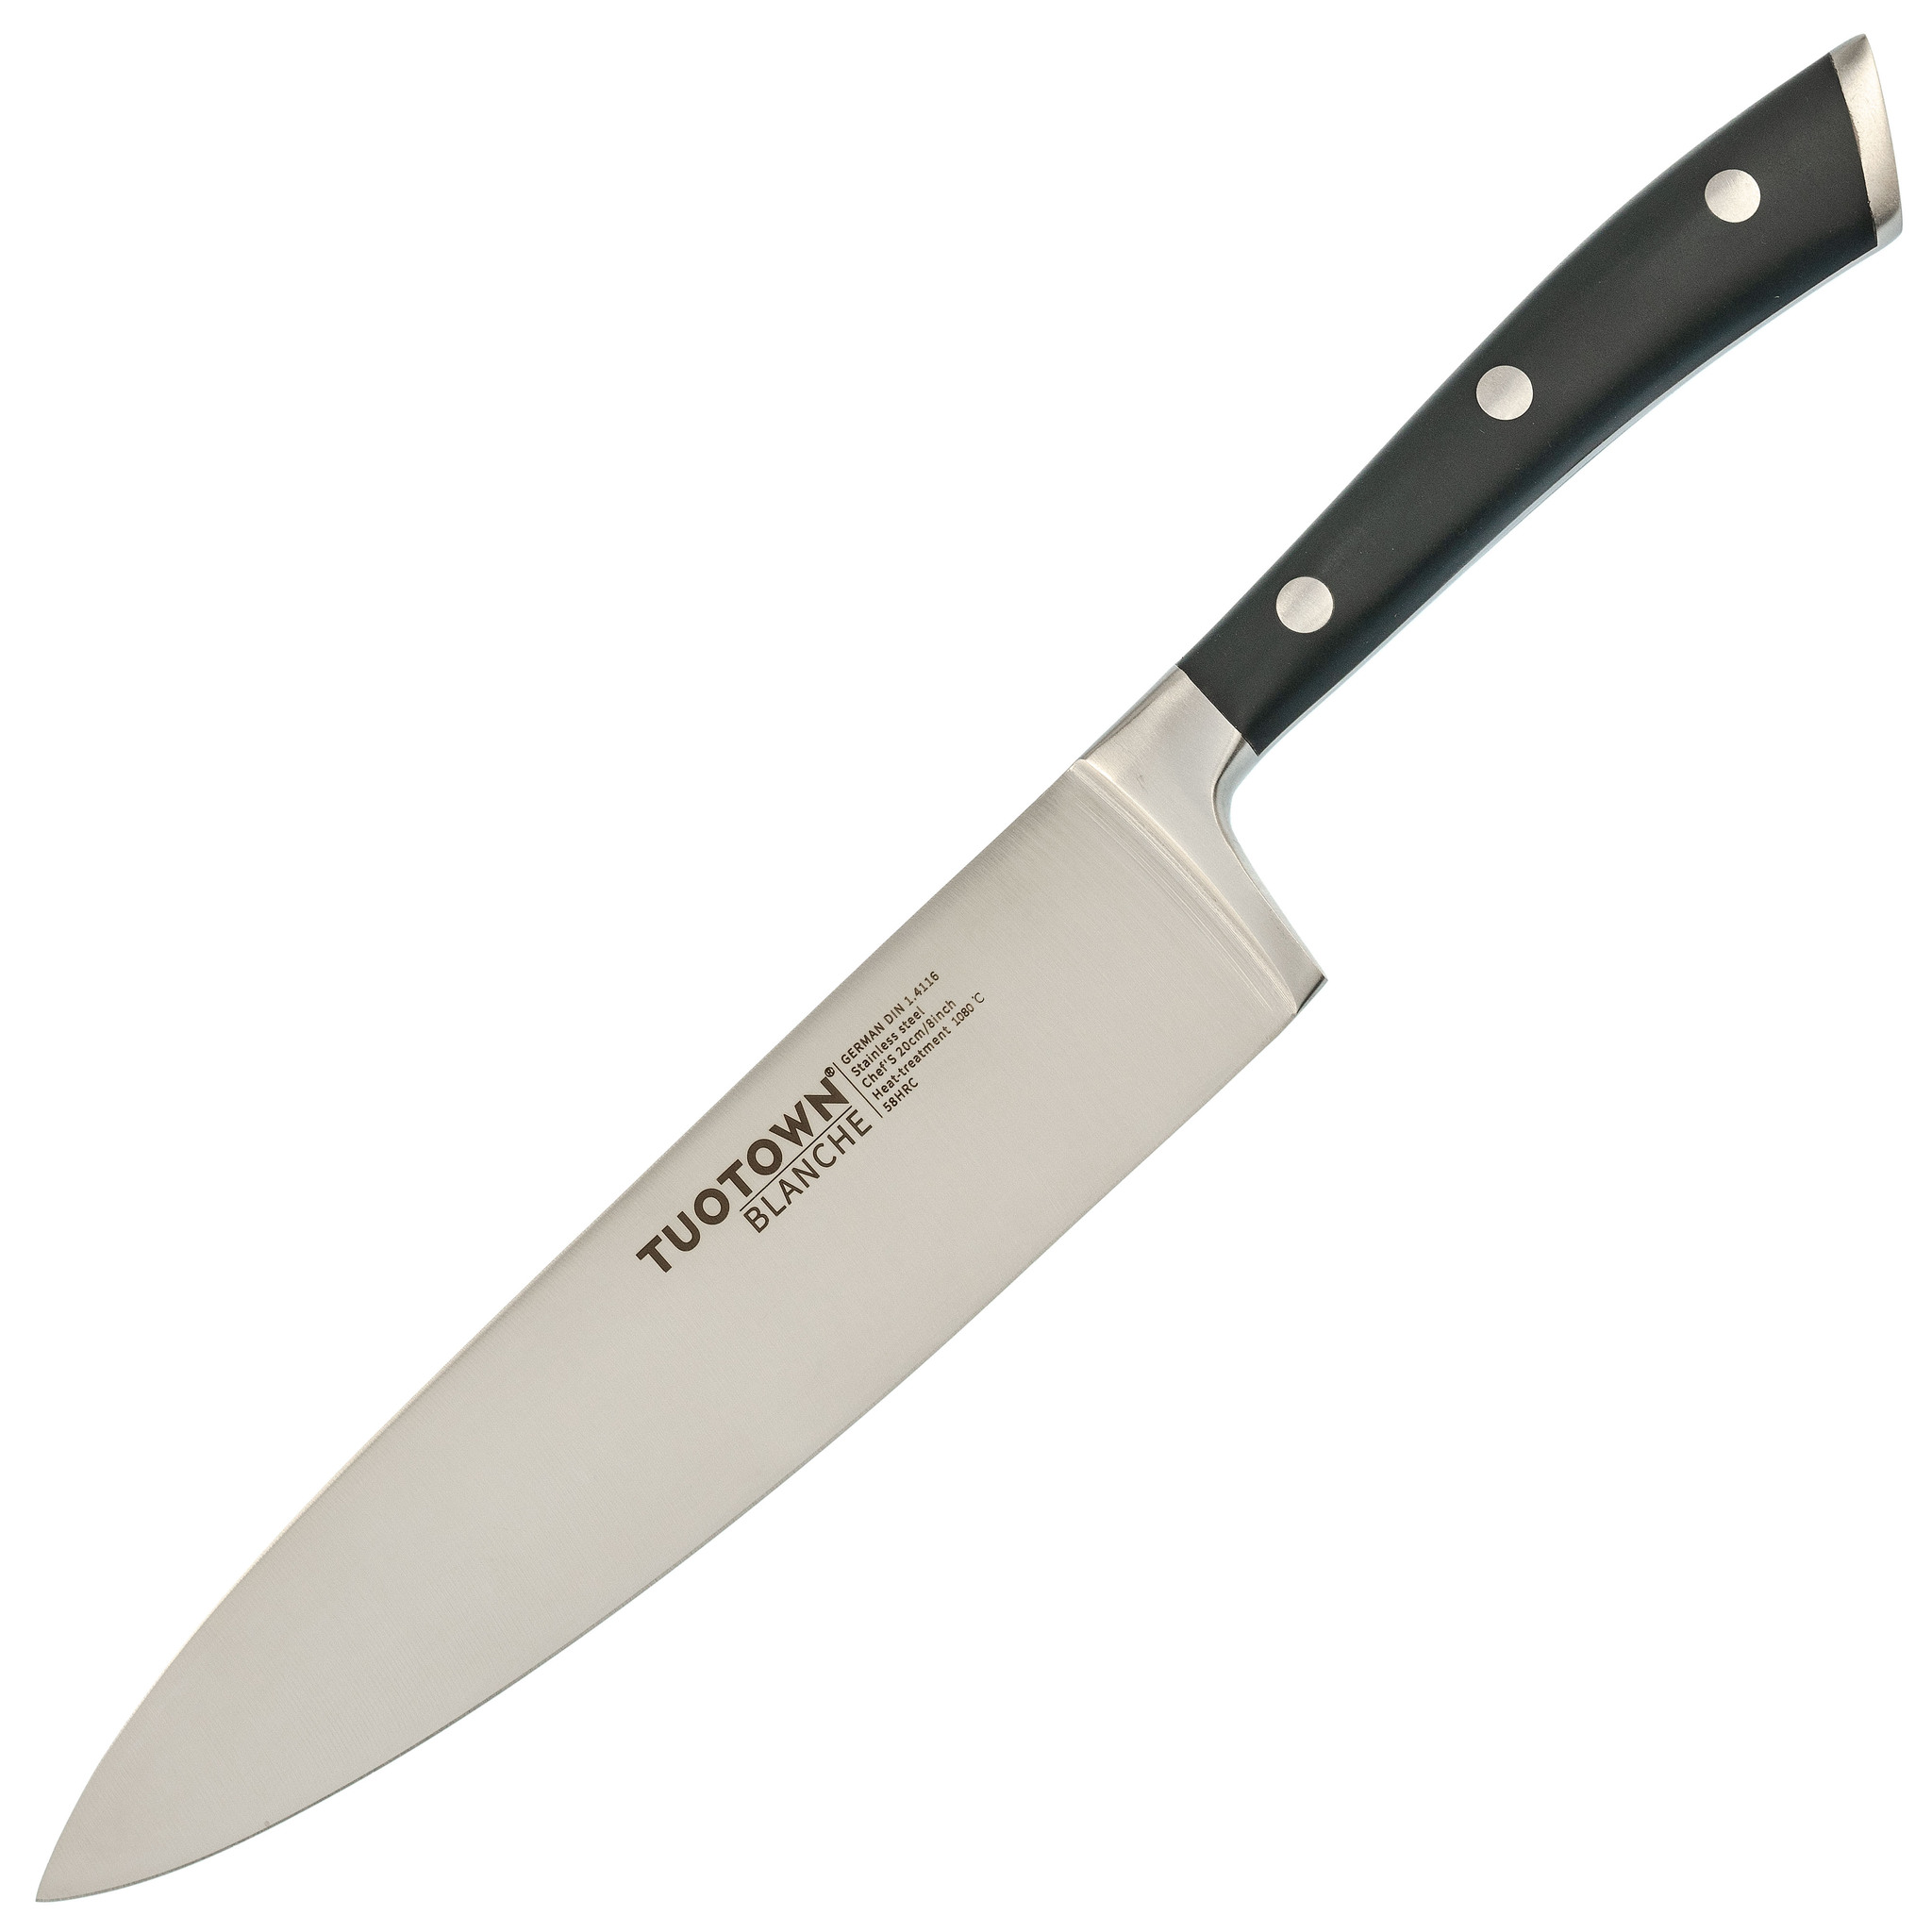 Кухонный нож Шеф Tuotown, серия BLANCHE, сталь 1.4116